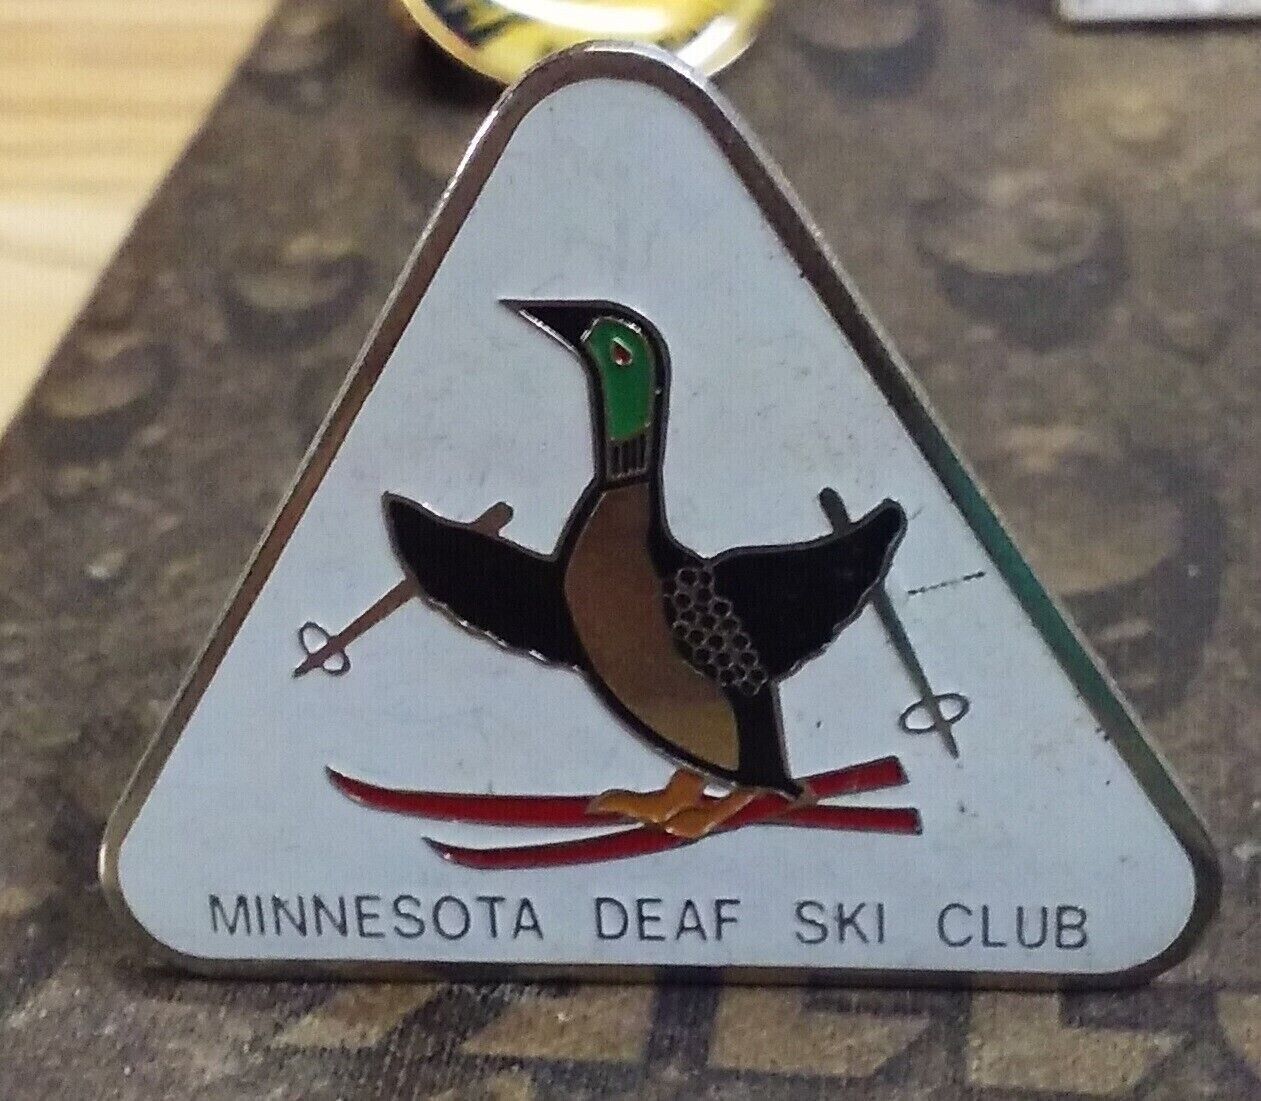 Minnesota Deaf Ski Club pin badge 